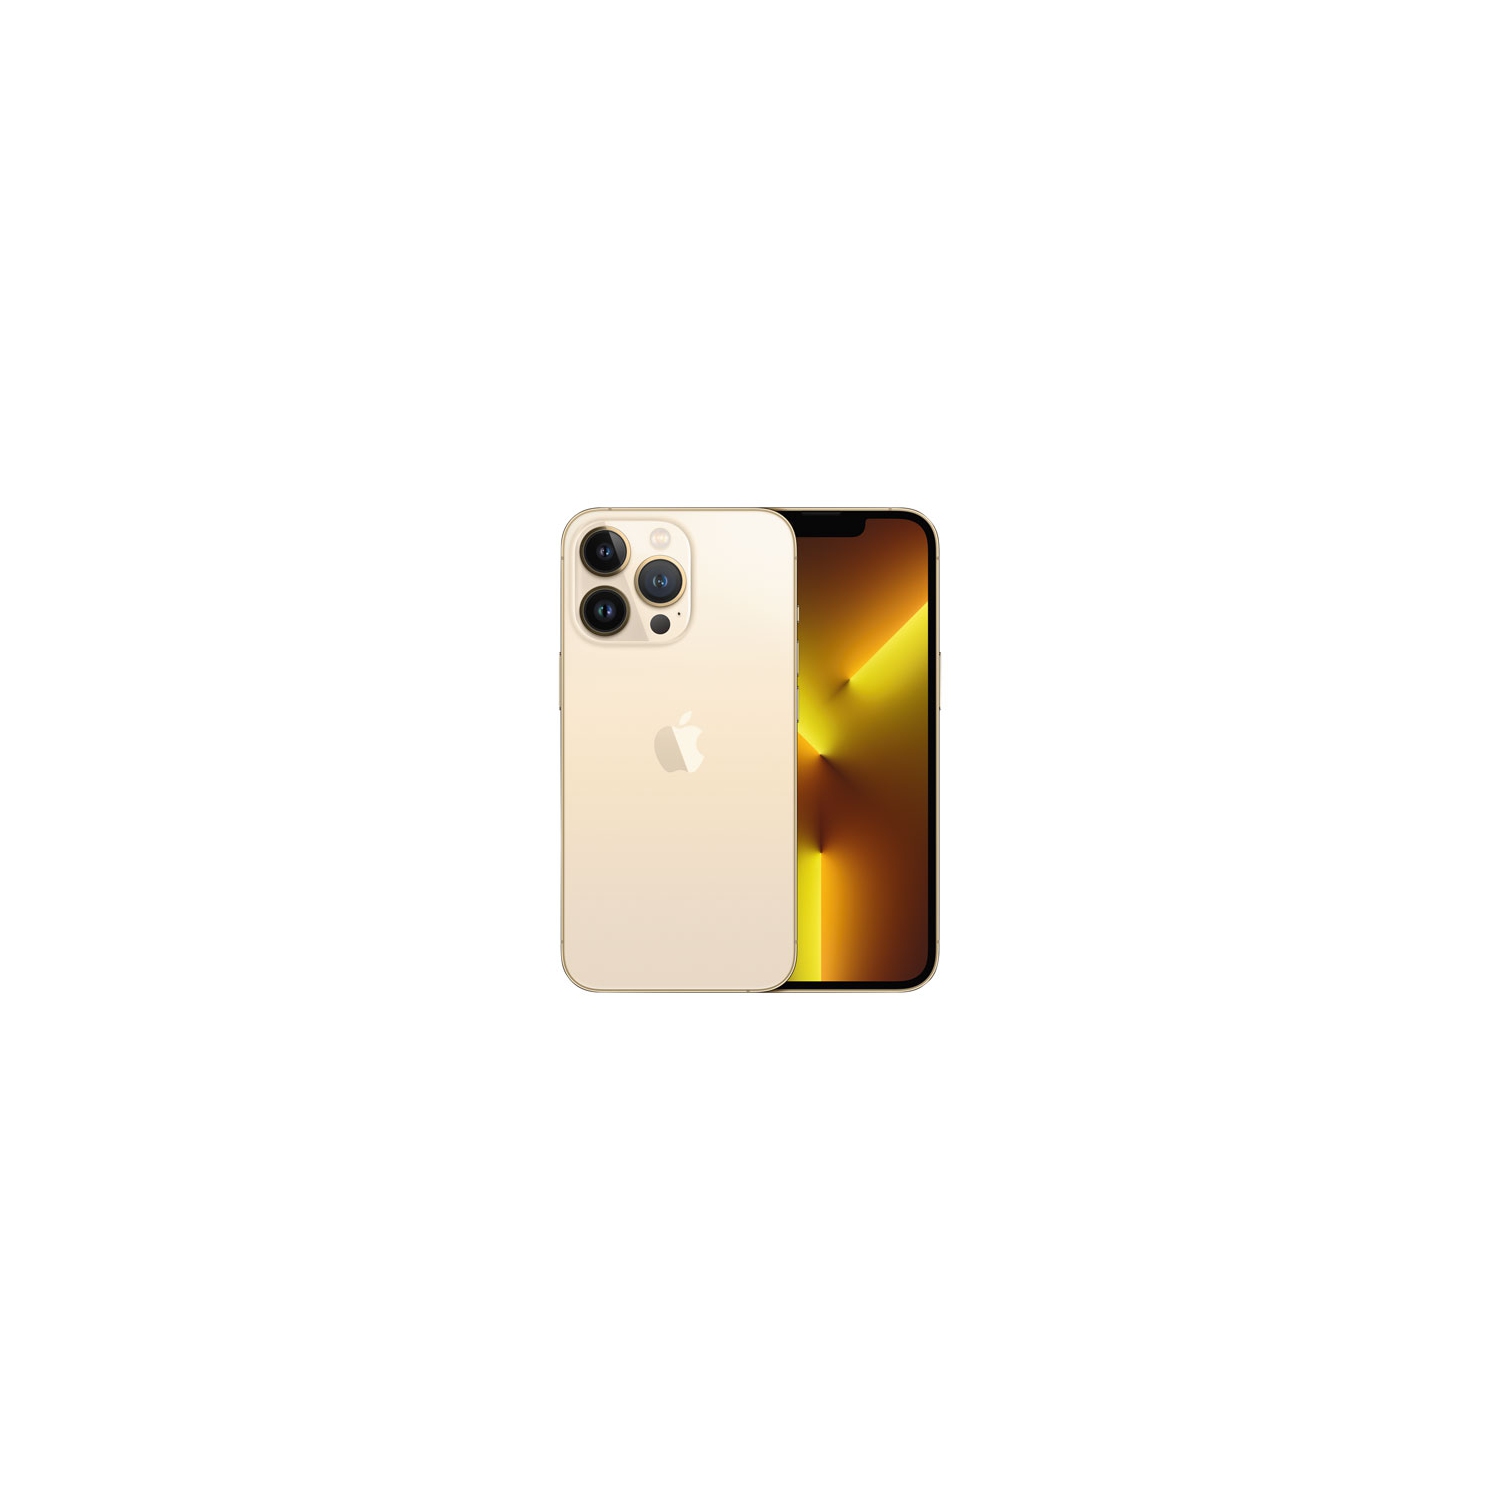 Apple iPhone 13 Pro 256GB - Gold - Unlocked - Open Box